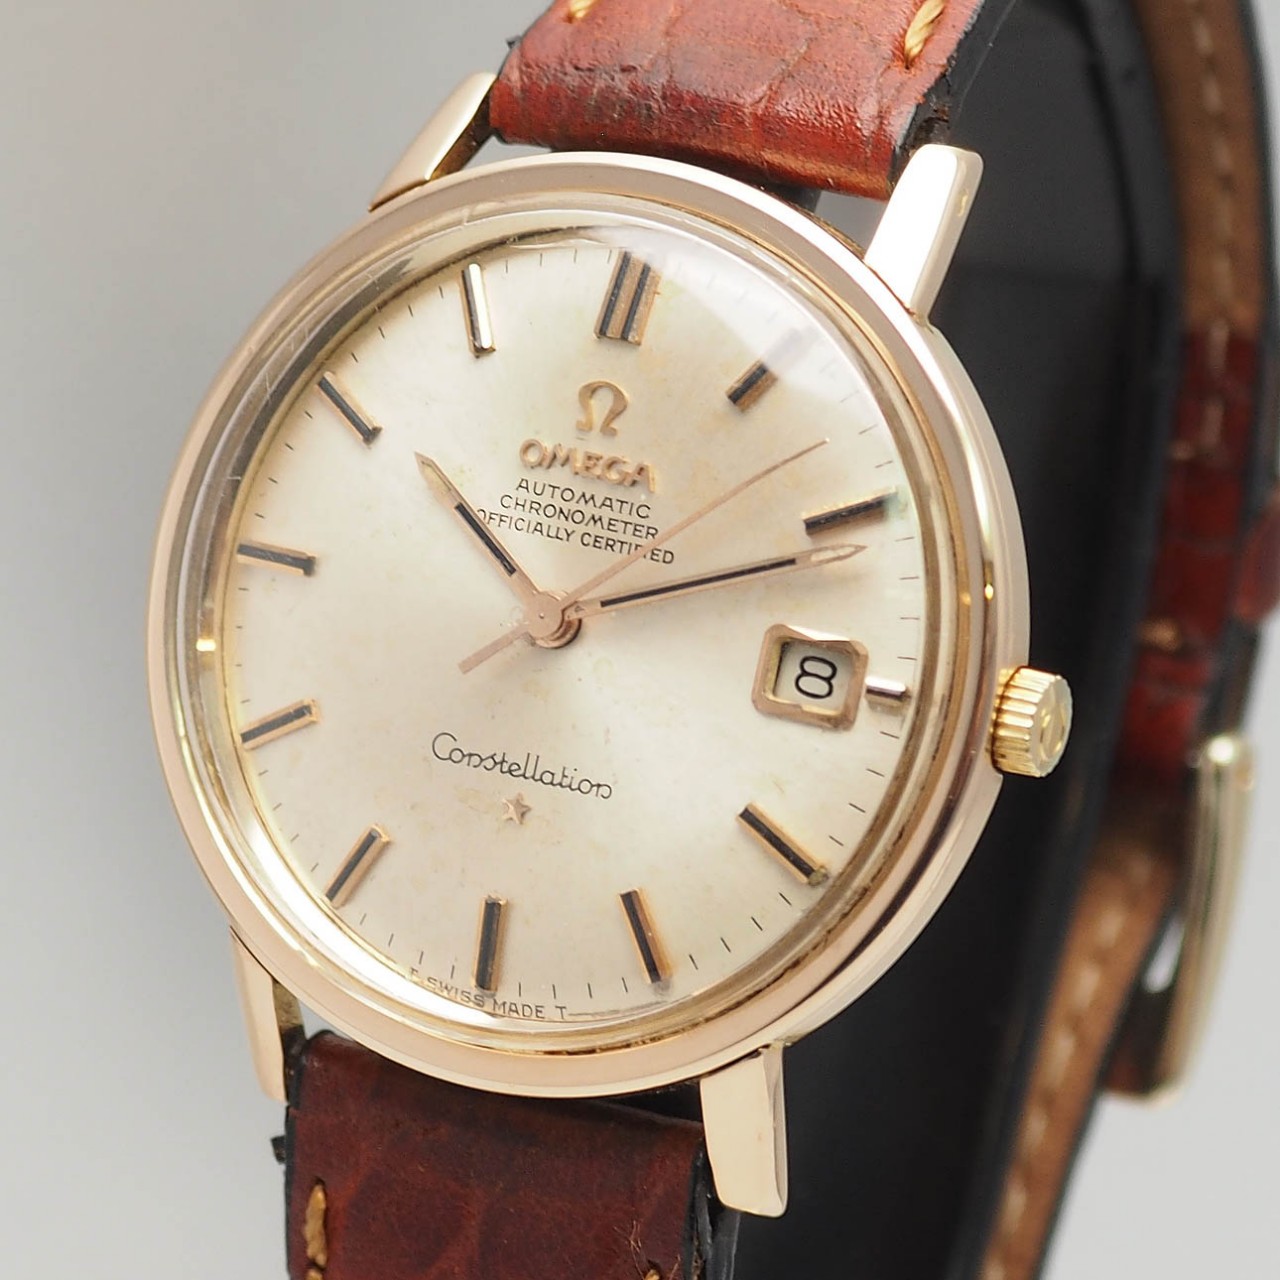 Omega Constellation Chronometre Vintage Automatik Ref.: 168.3010 -Gold 18k/750